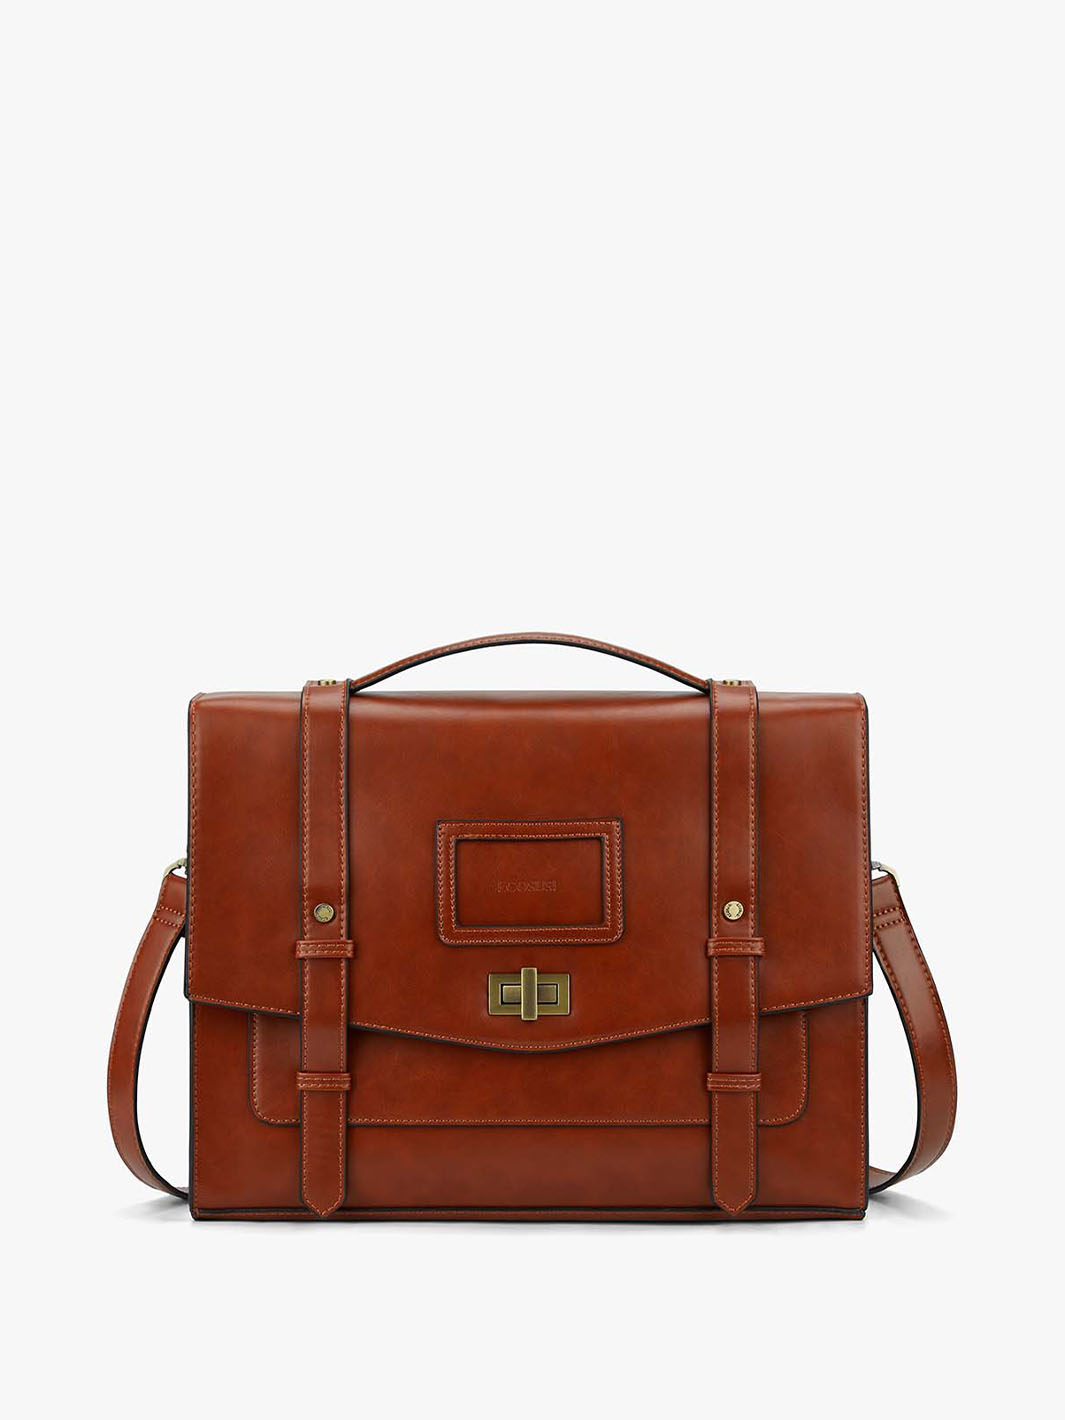 Ecosusi Tote Bag Convertible Backpack for Women Vegan Leather Handbag Multifuction Shoulder Bag